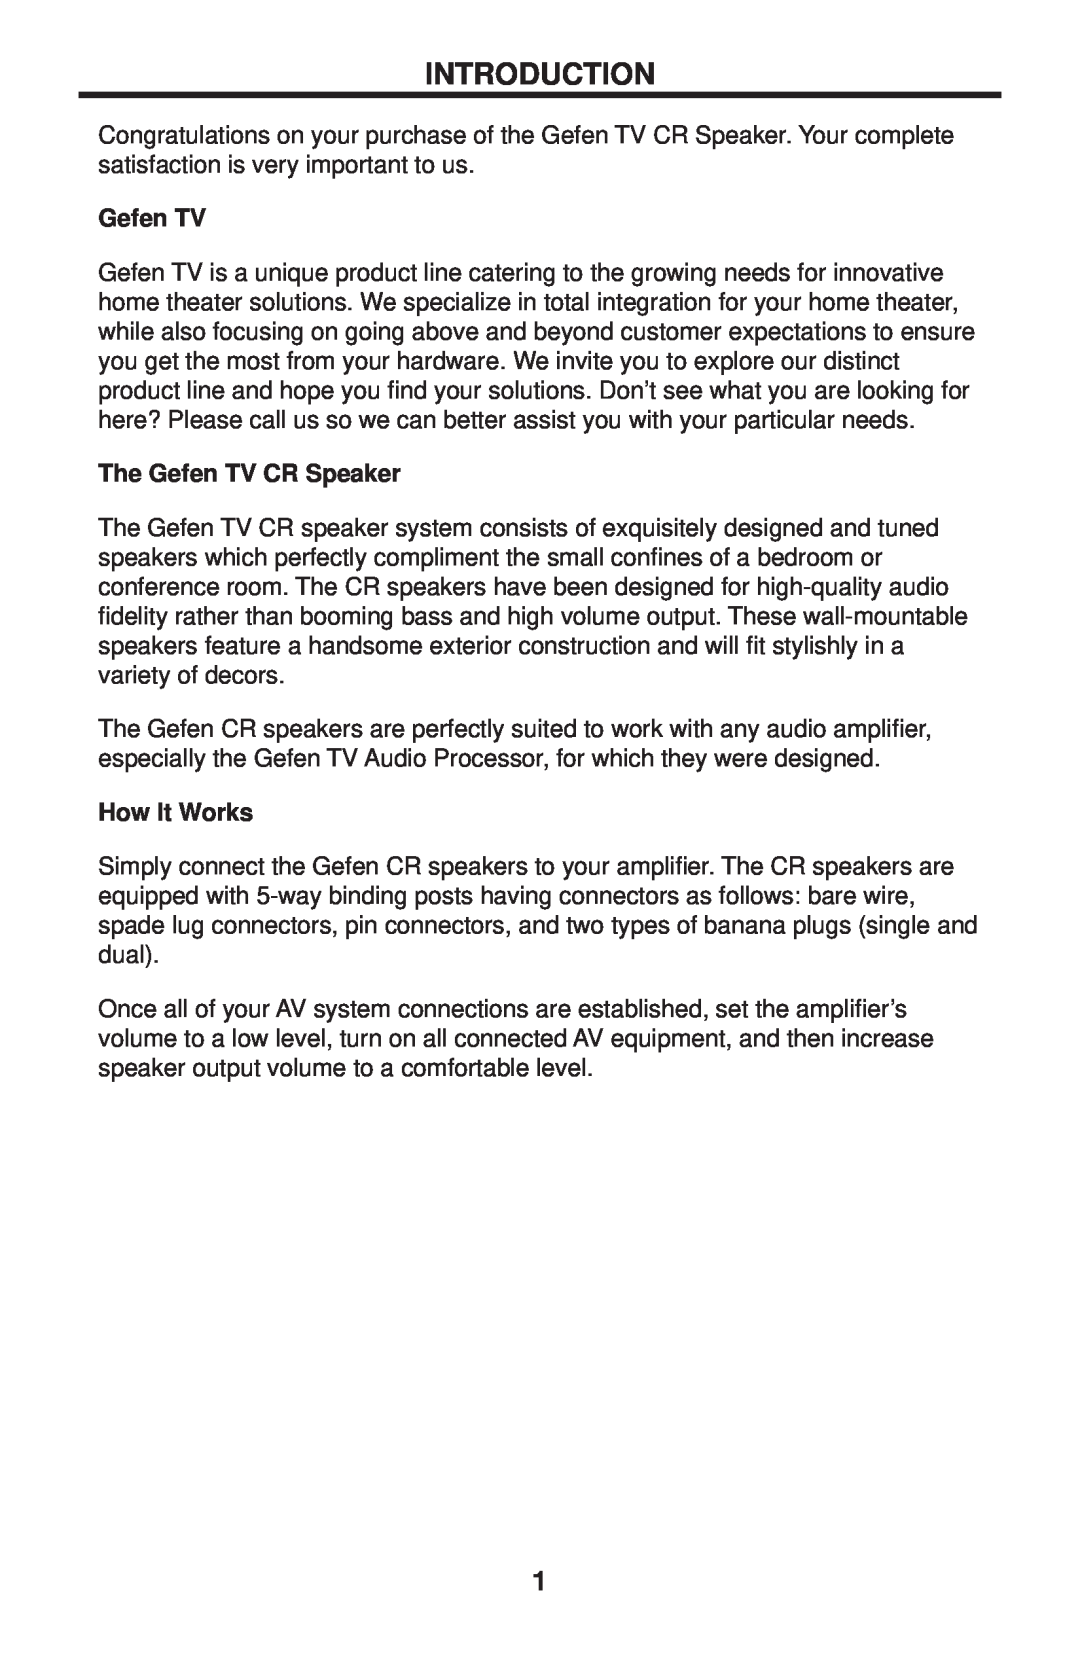 Gefen GTV-CR-5SP, GTV-CR-3SP, GTV-CR-2SP user manual Introduction, The Gefen TV CR Speaker, How It Works 